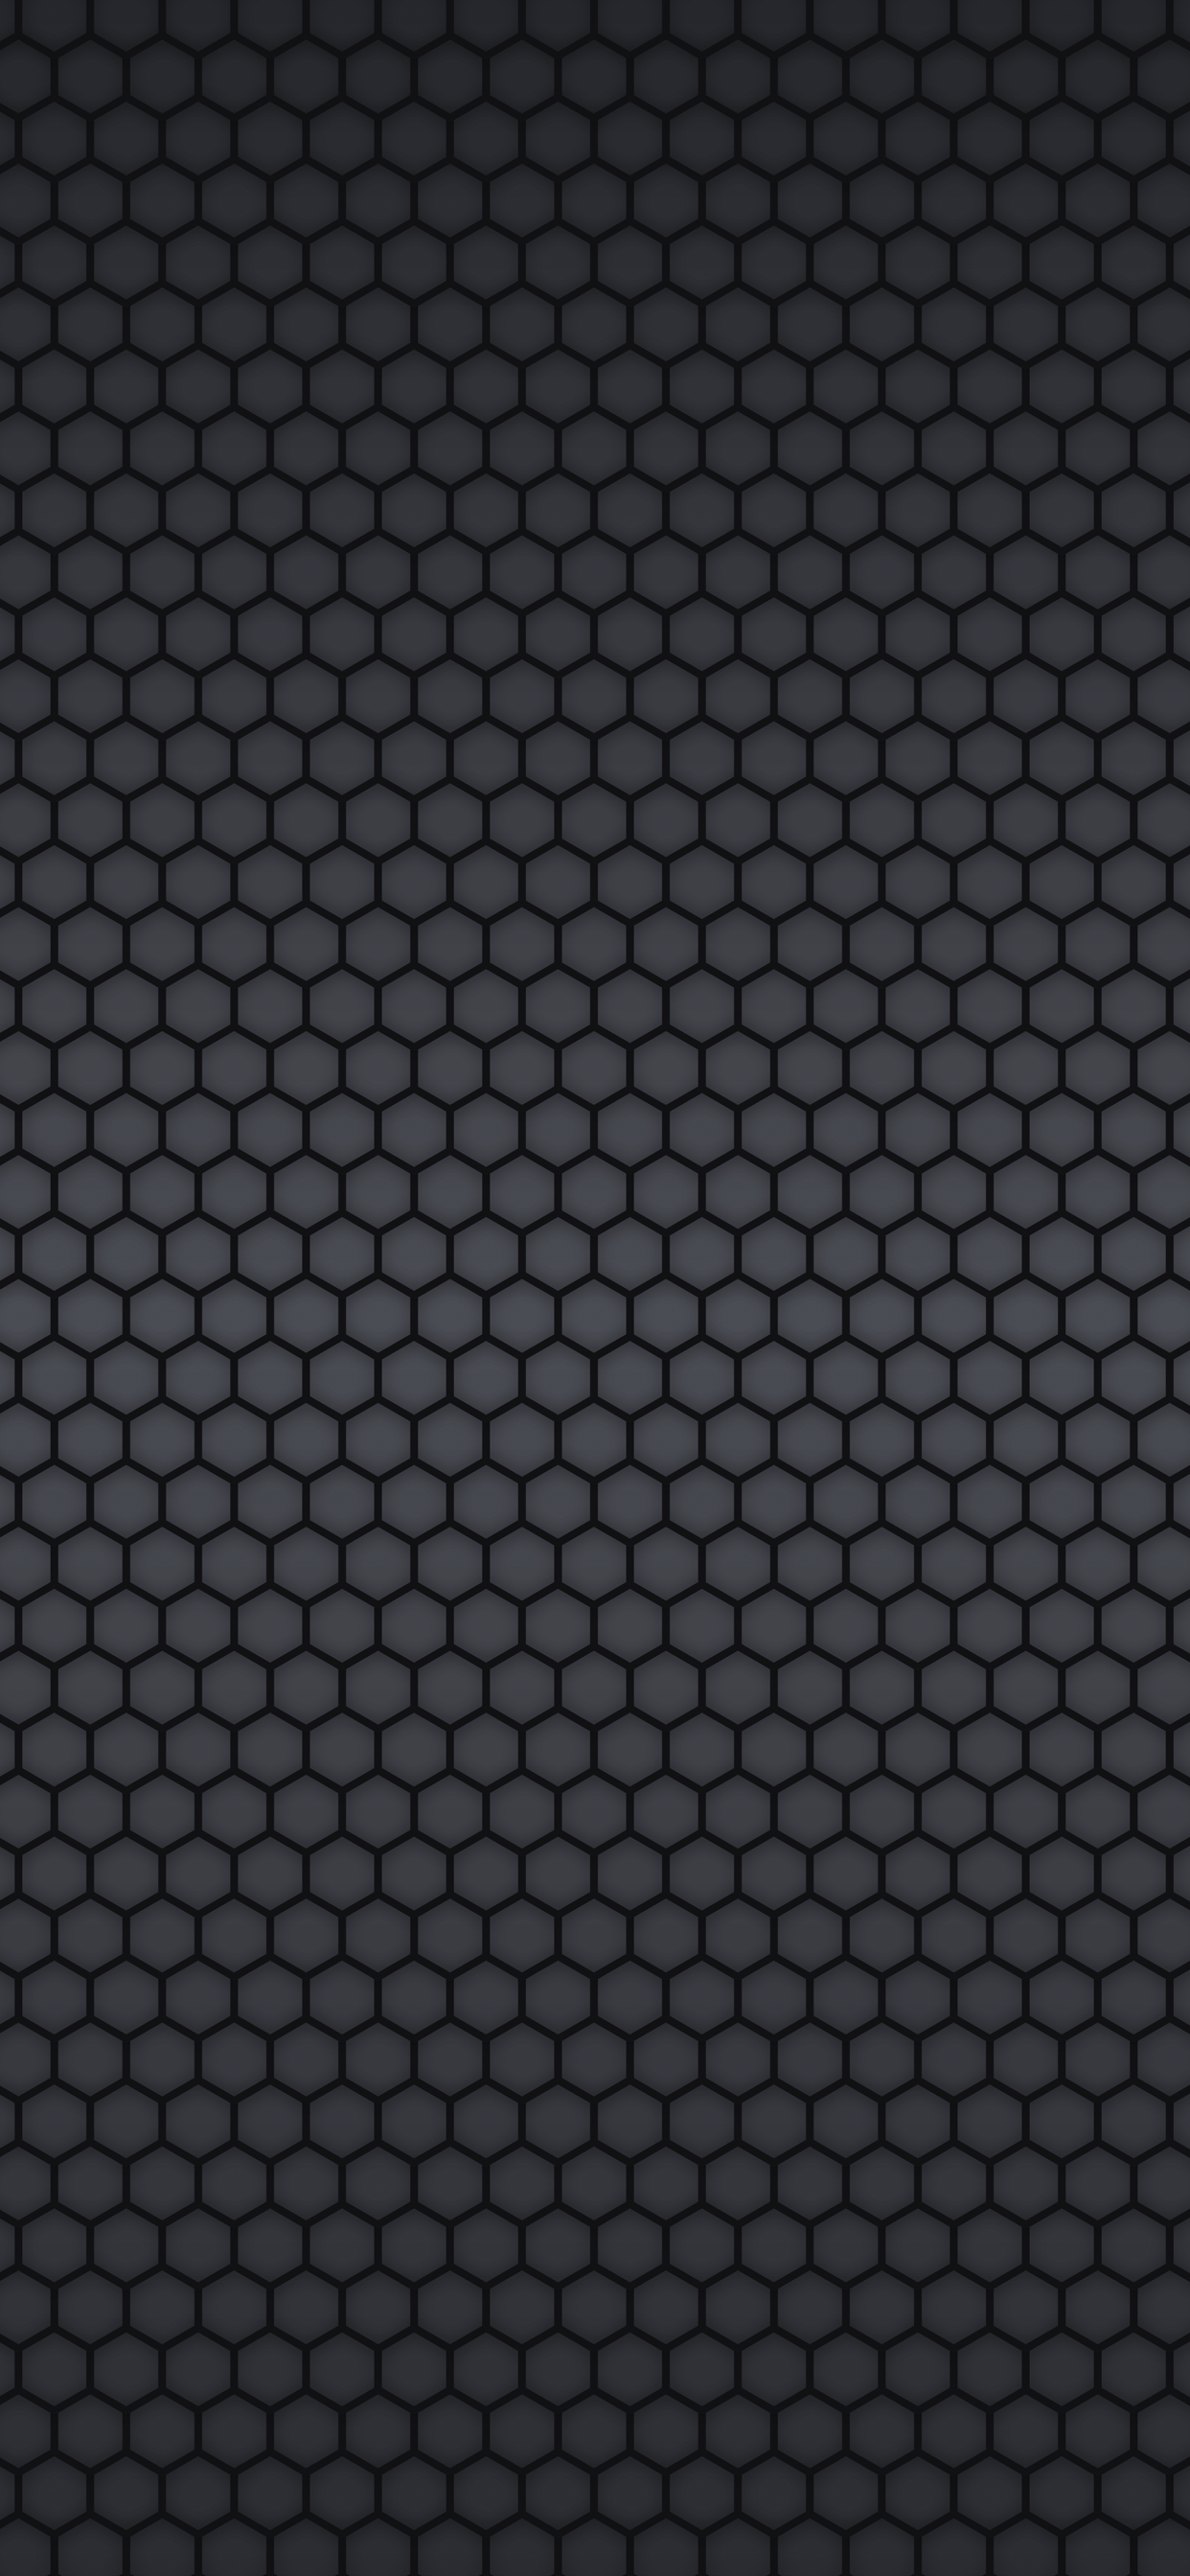 Patterned Black Wallpaperwallpaper.dog